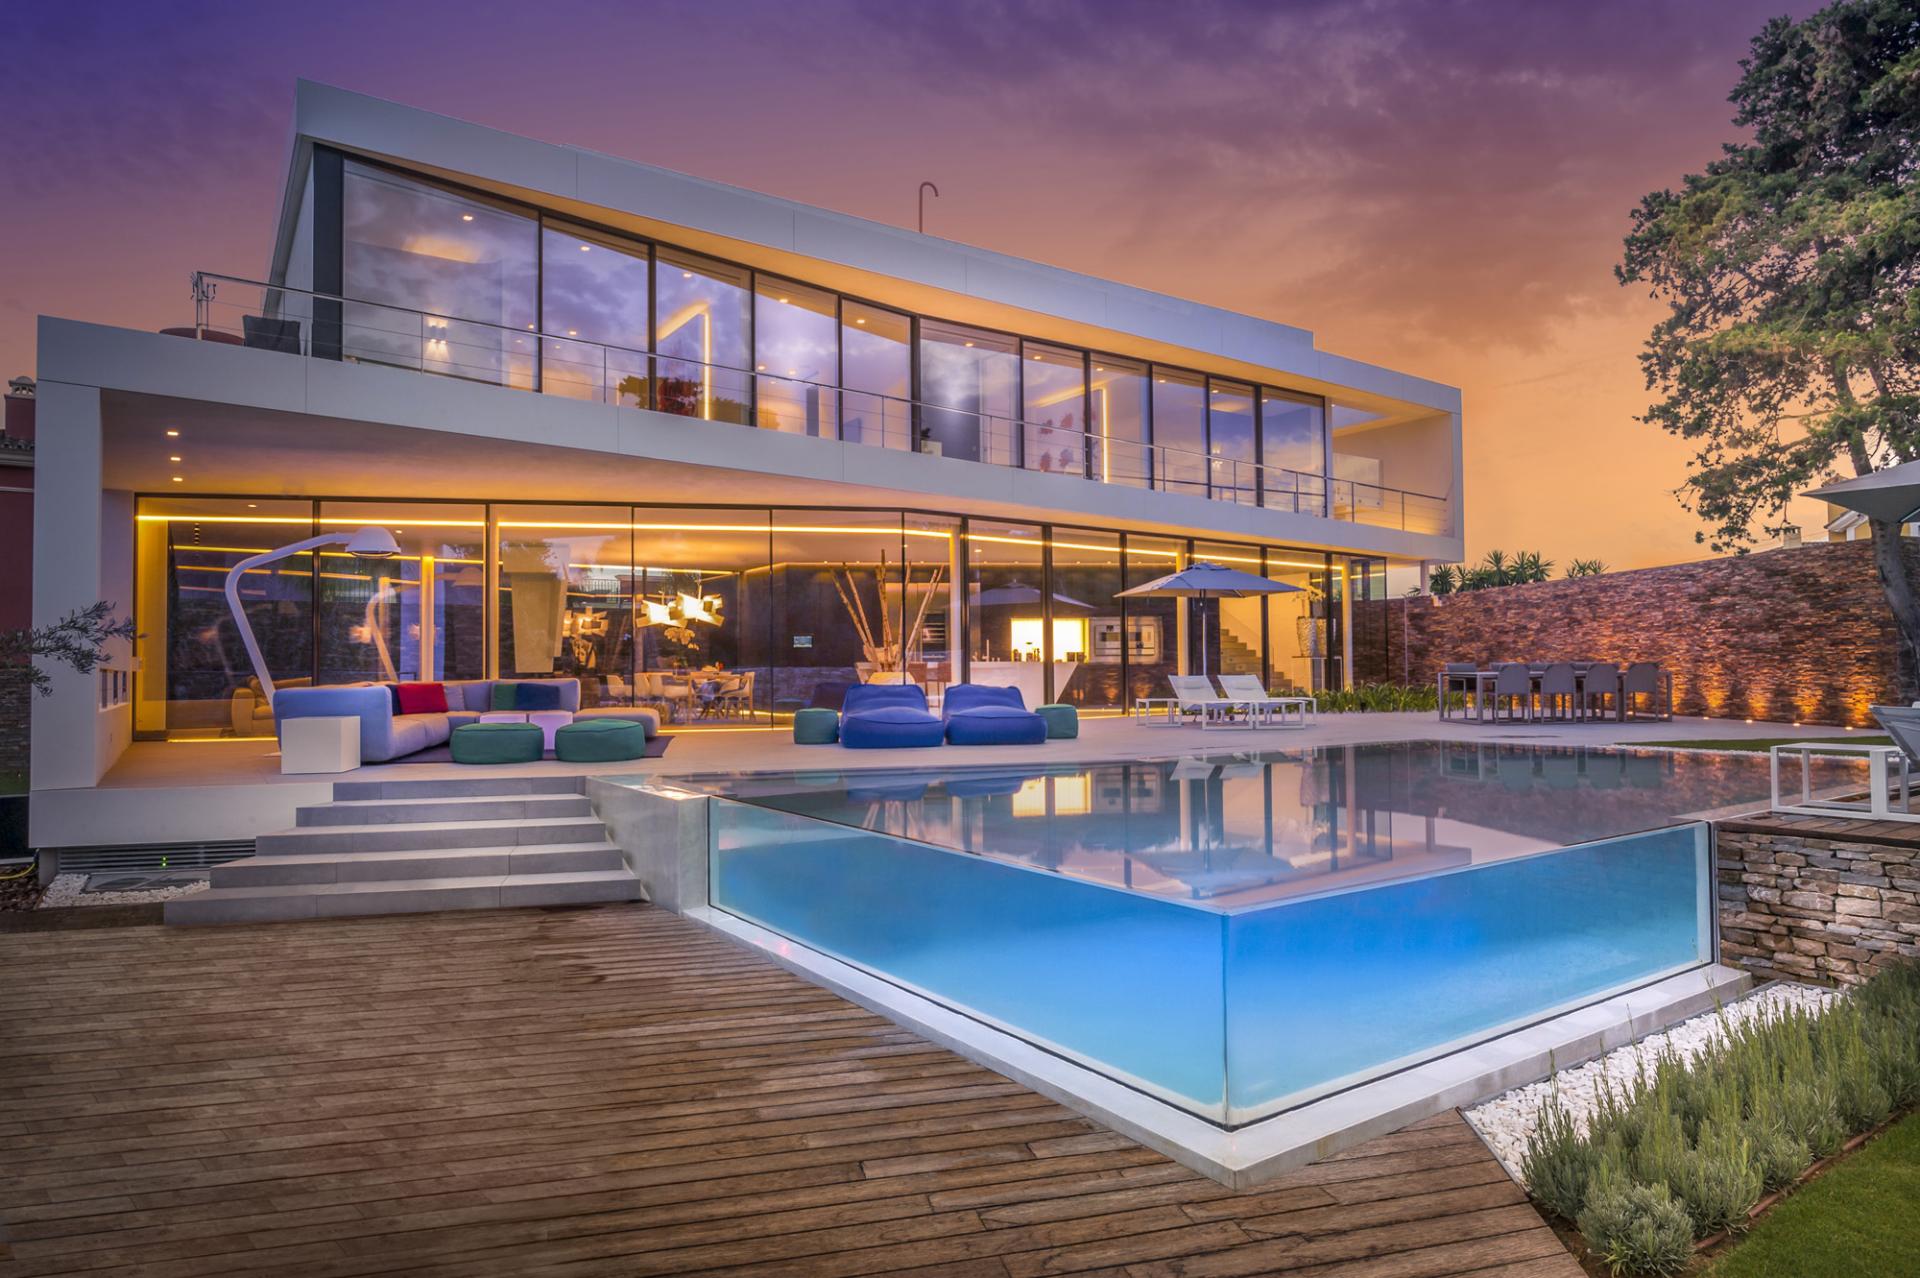 Modern Mediterranean Villa With A Pool